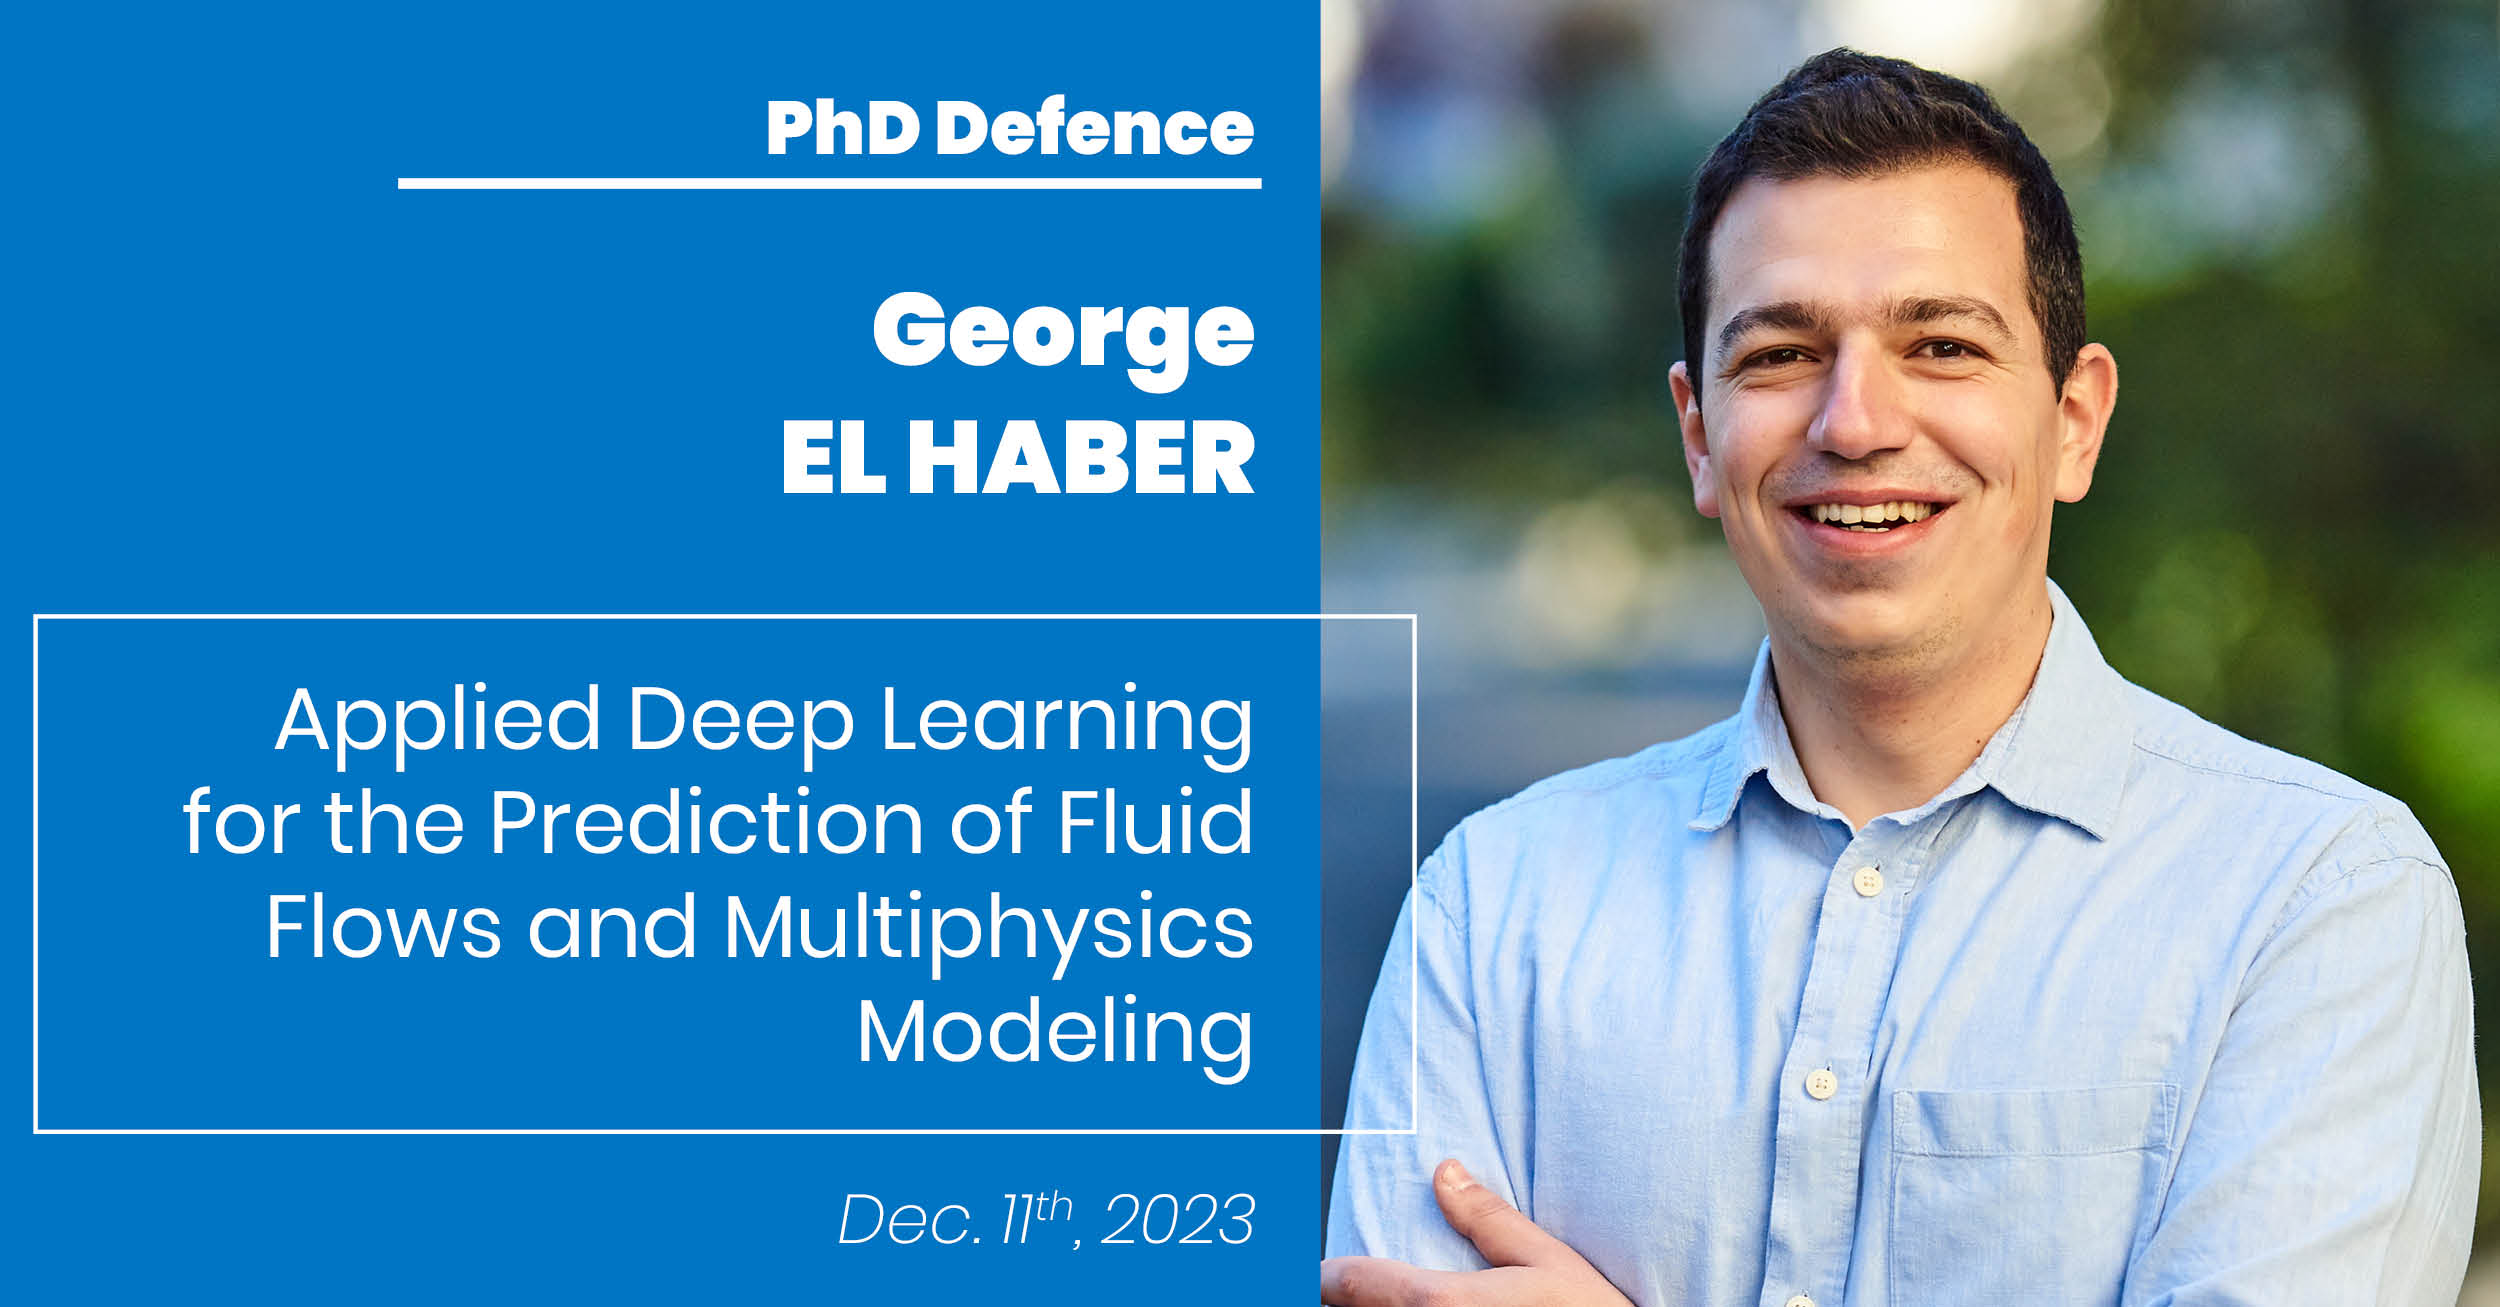 PhD defence of George El Haber